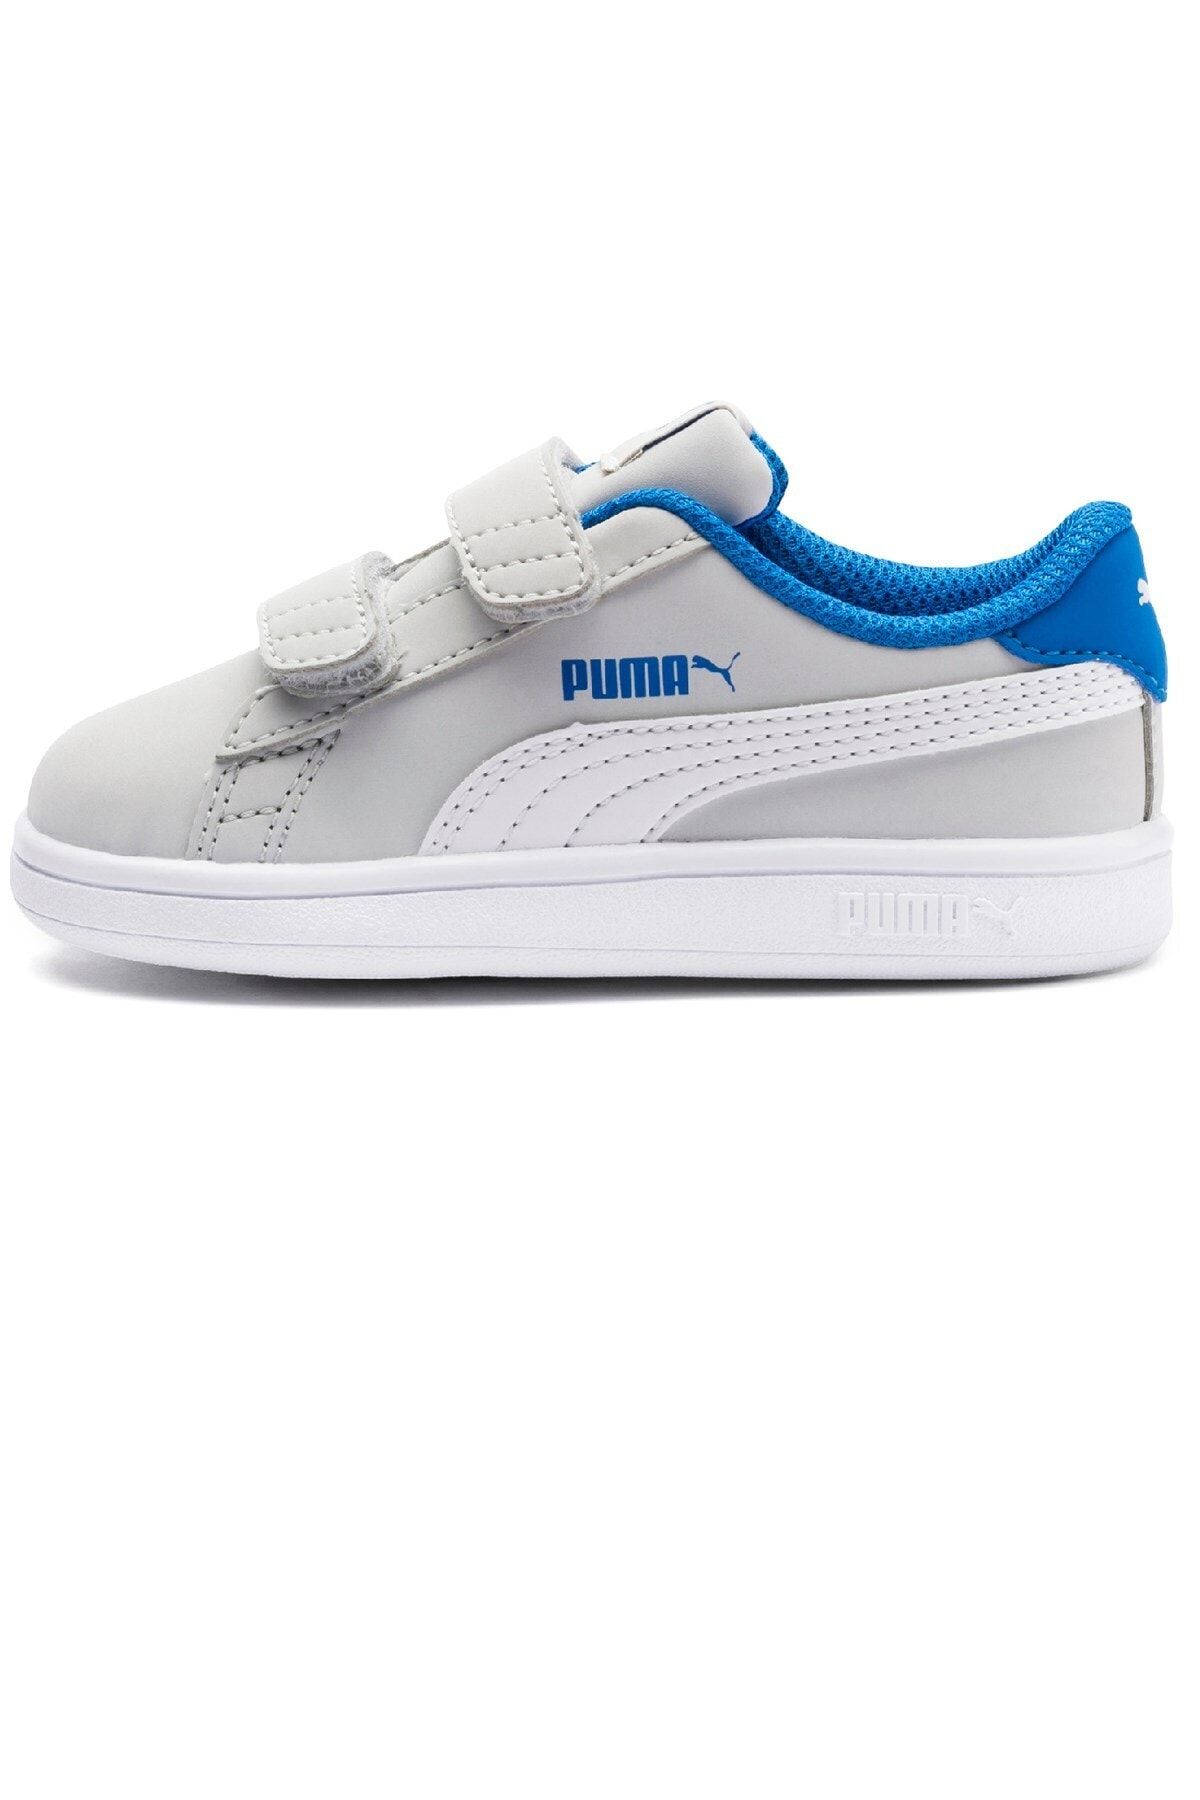 Puma Puma Puma Smash V2 Buck V Inf Beyaz Gri Kız Çocuk Sneaker Ayakkabı 100414673